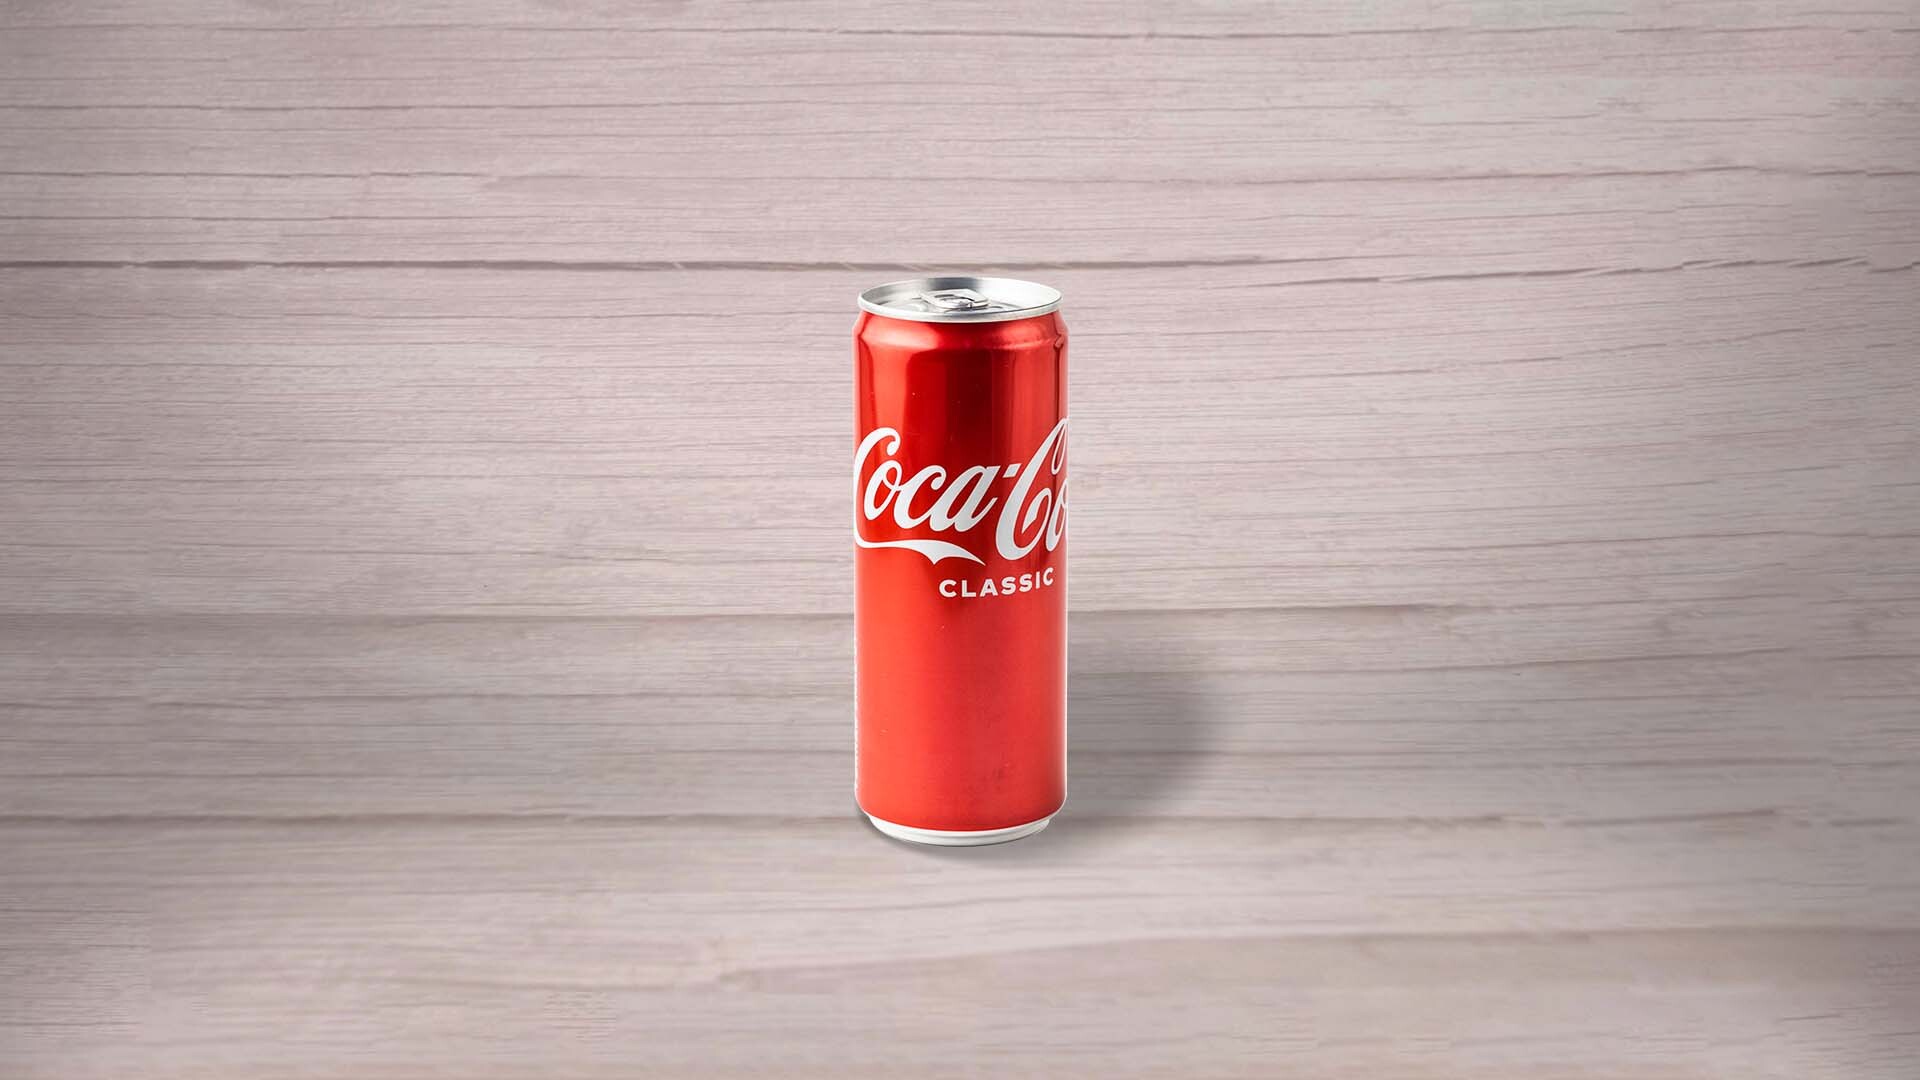 Կոկա-Կոլա